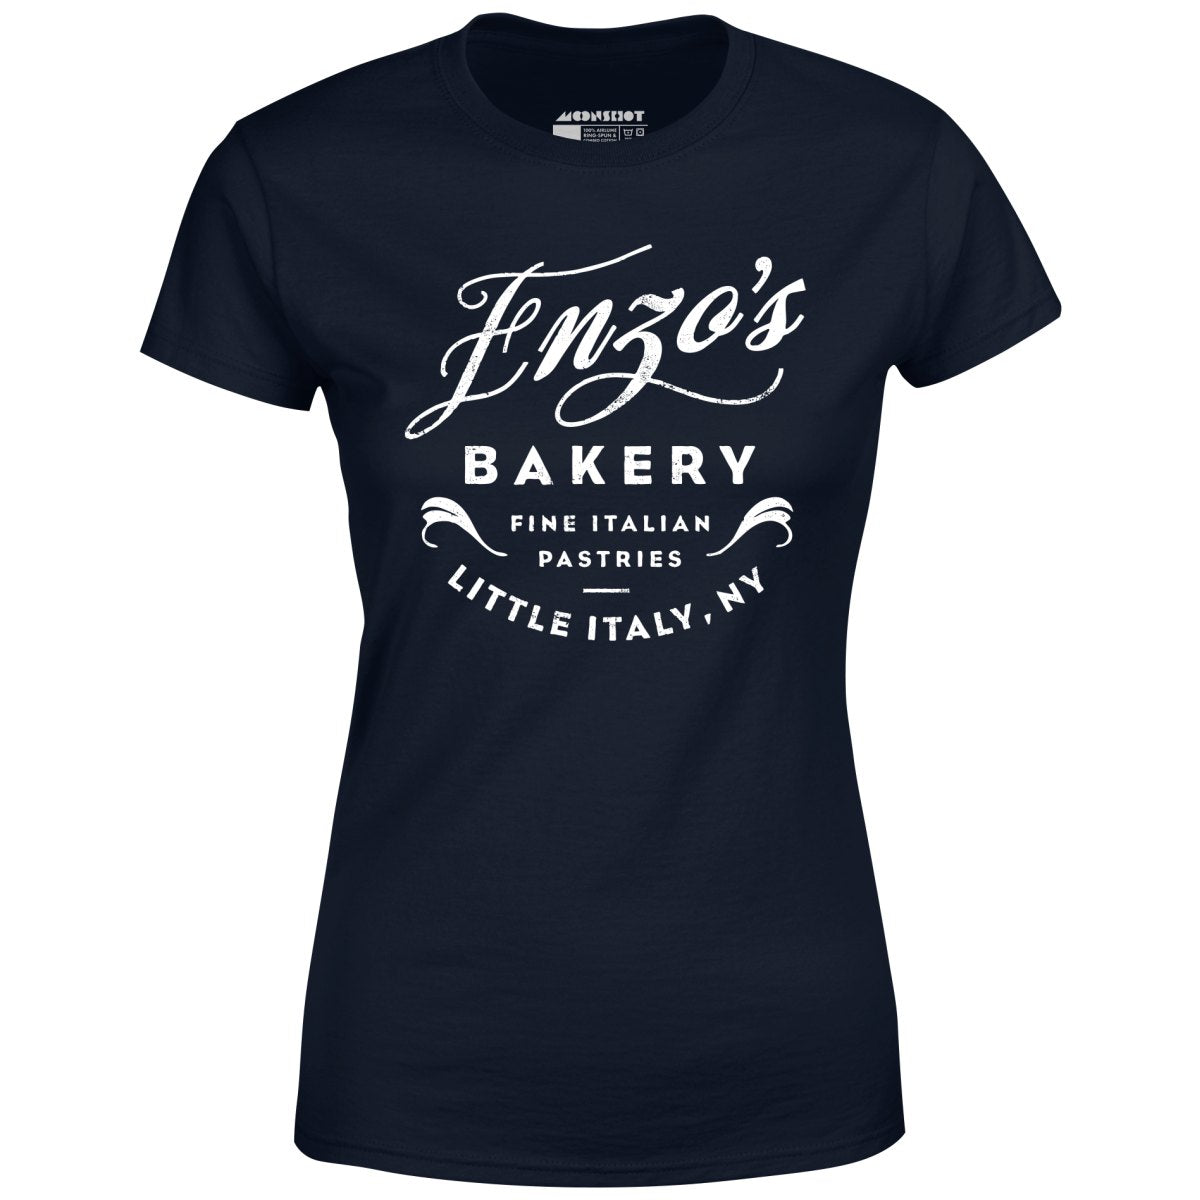 Enzo's Bakery - Women's T-Shirt